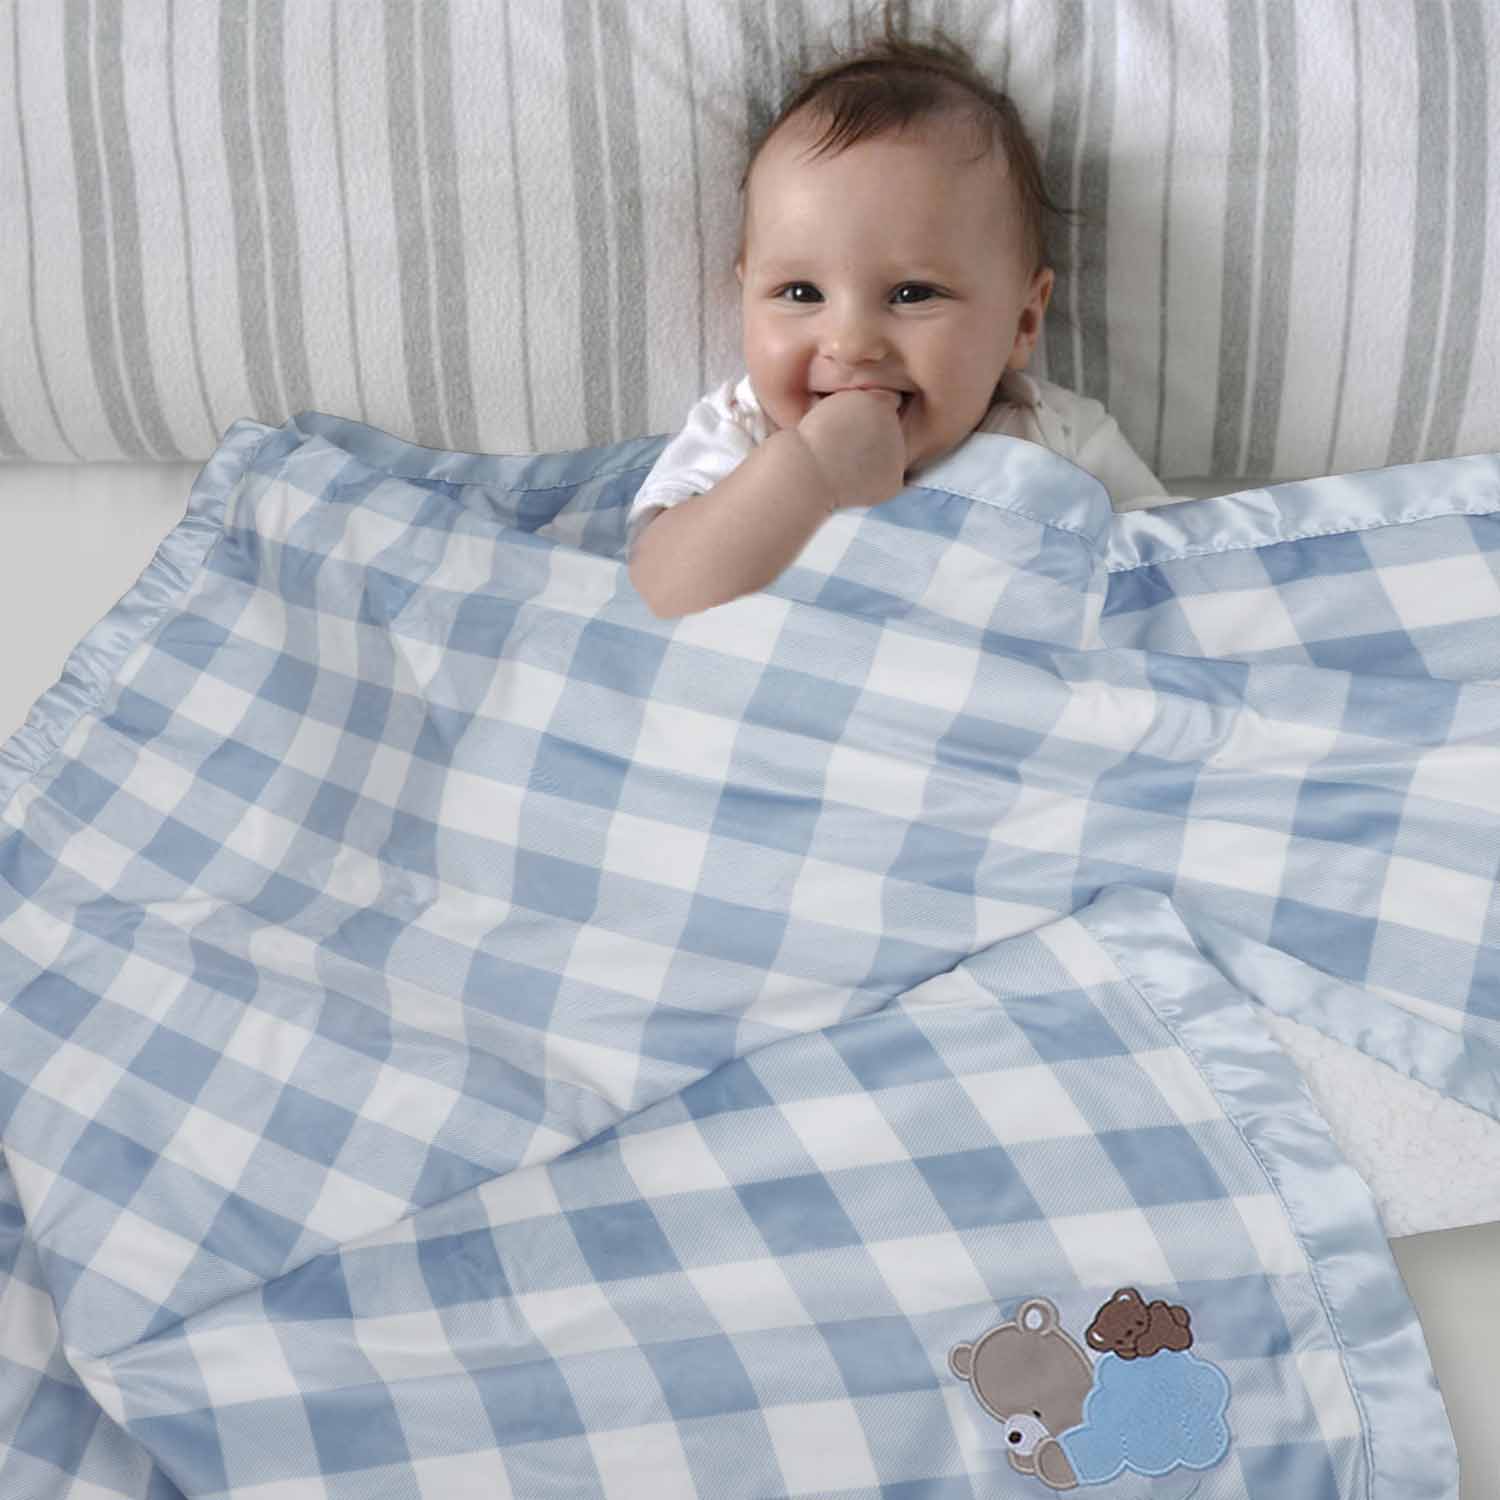 Baby Moo Checkered Charm Soft Fur Blanket - Grey - Baby Moo